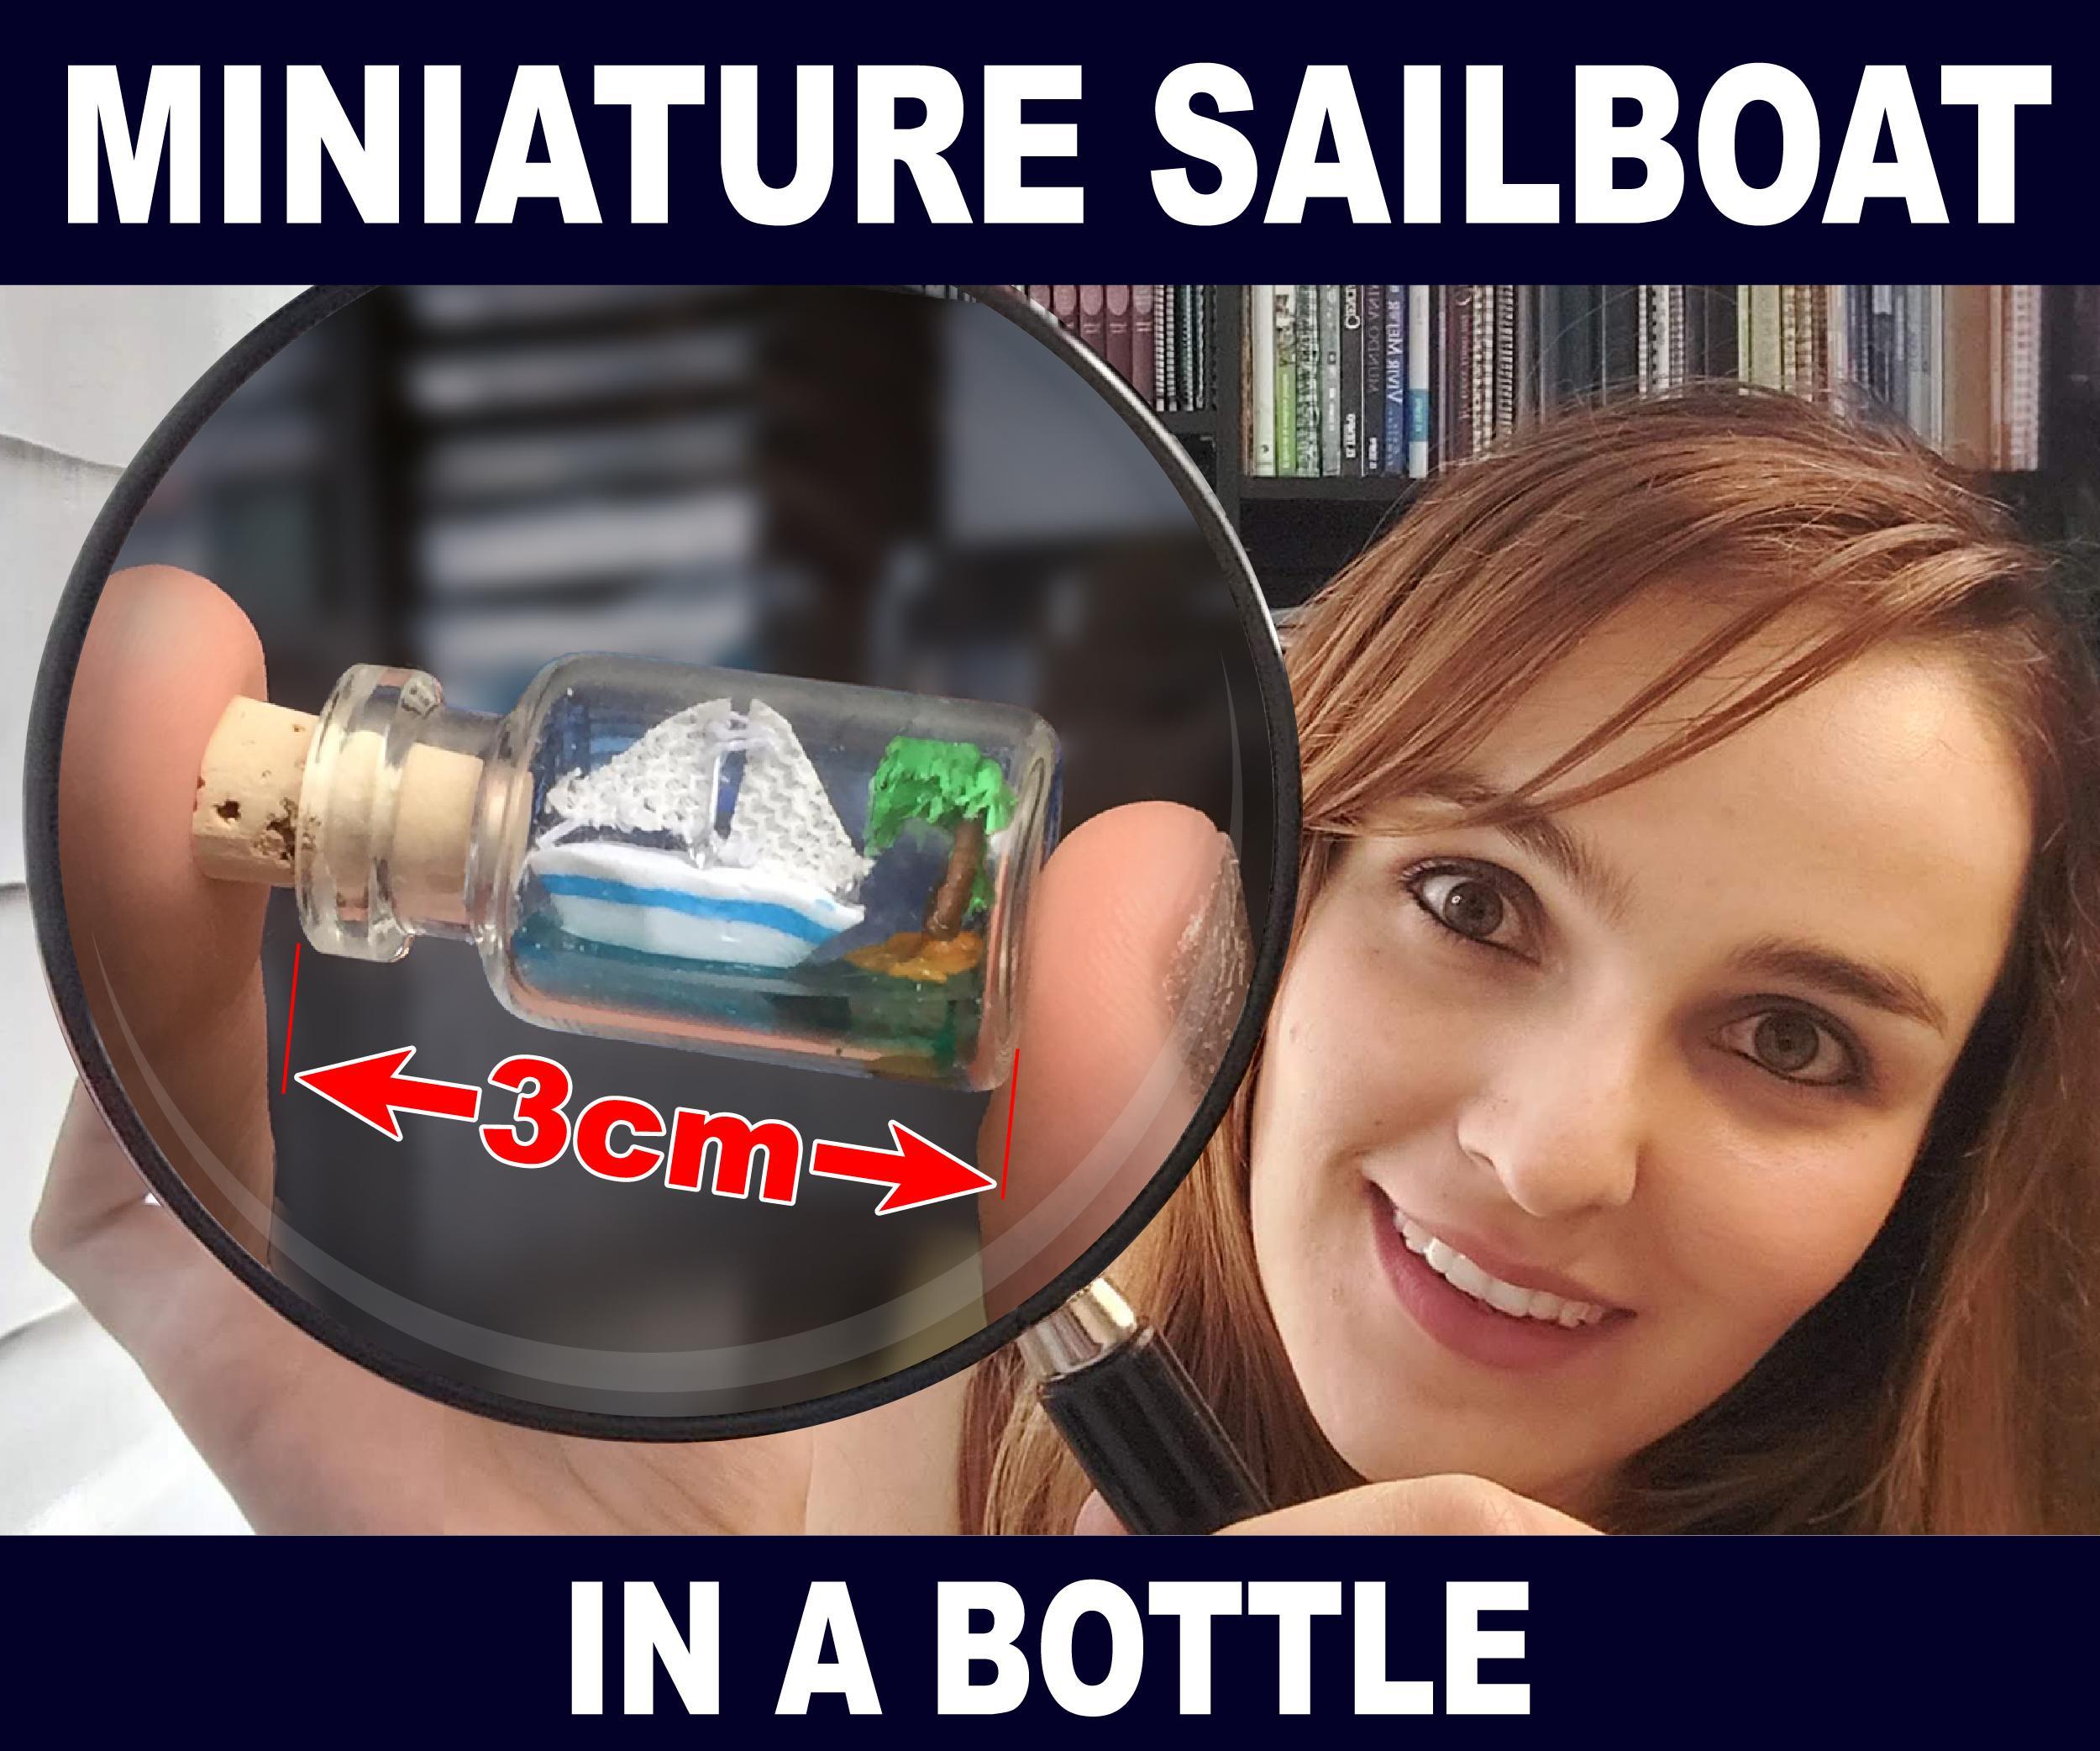 Miniature Sailboat in a Bottle